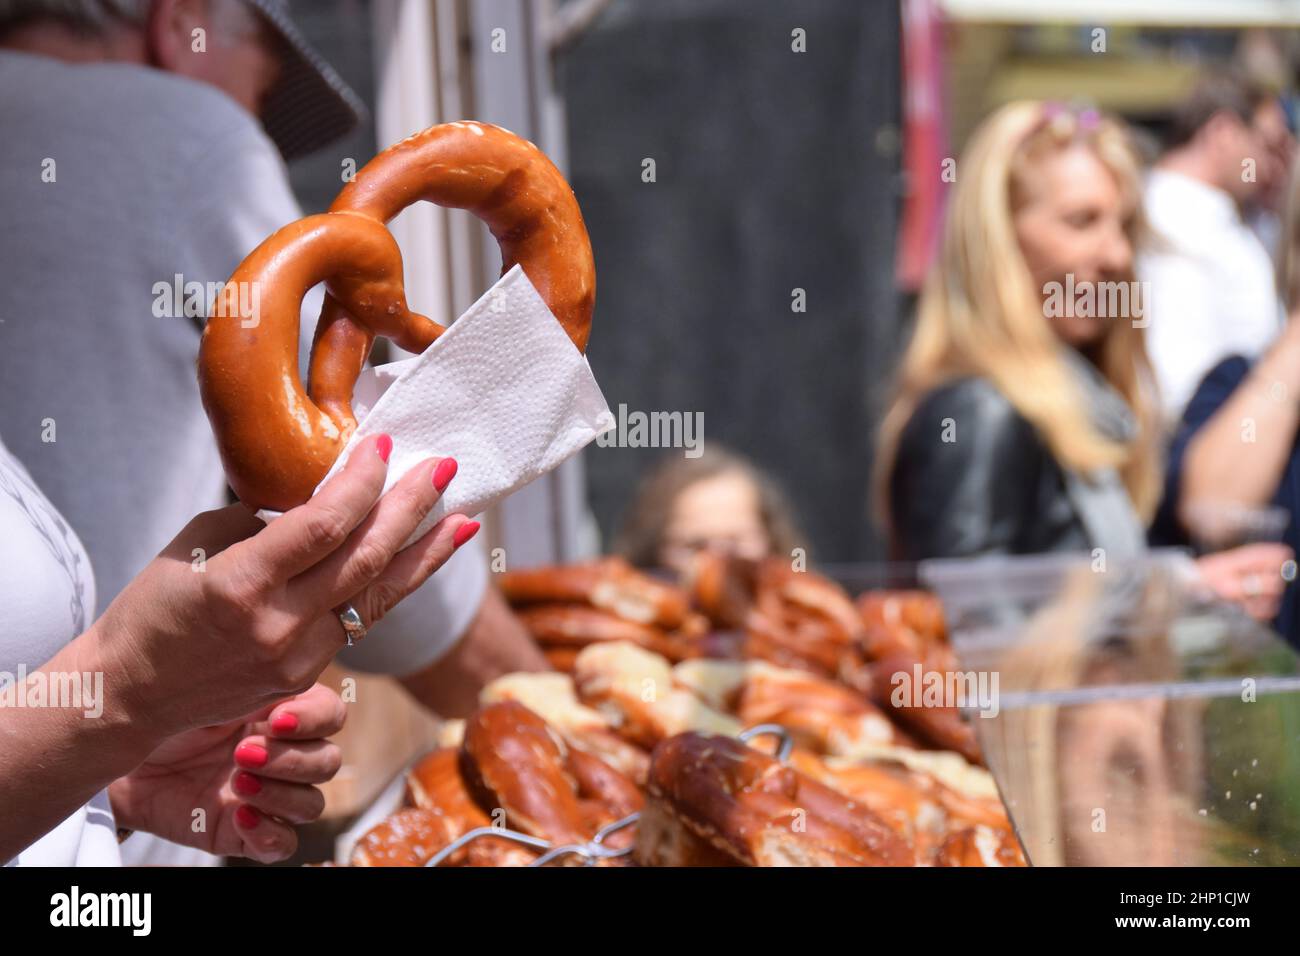 Selling a pretzel outdoors Stock Photo